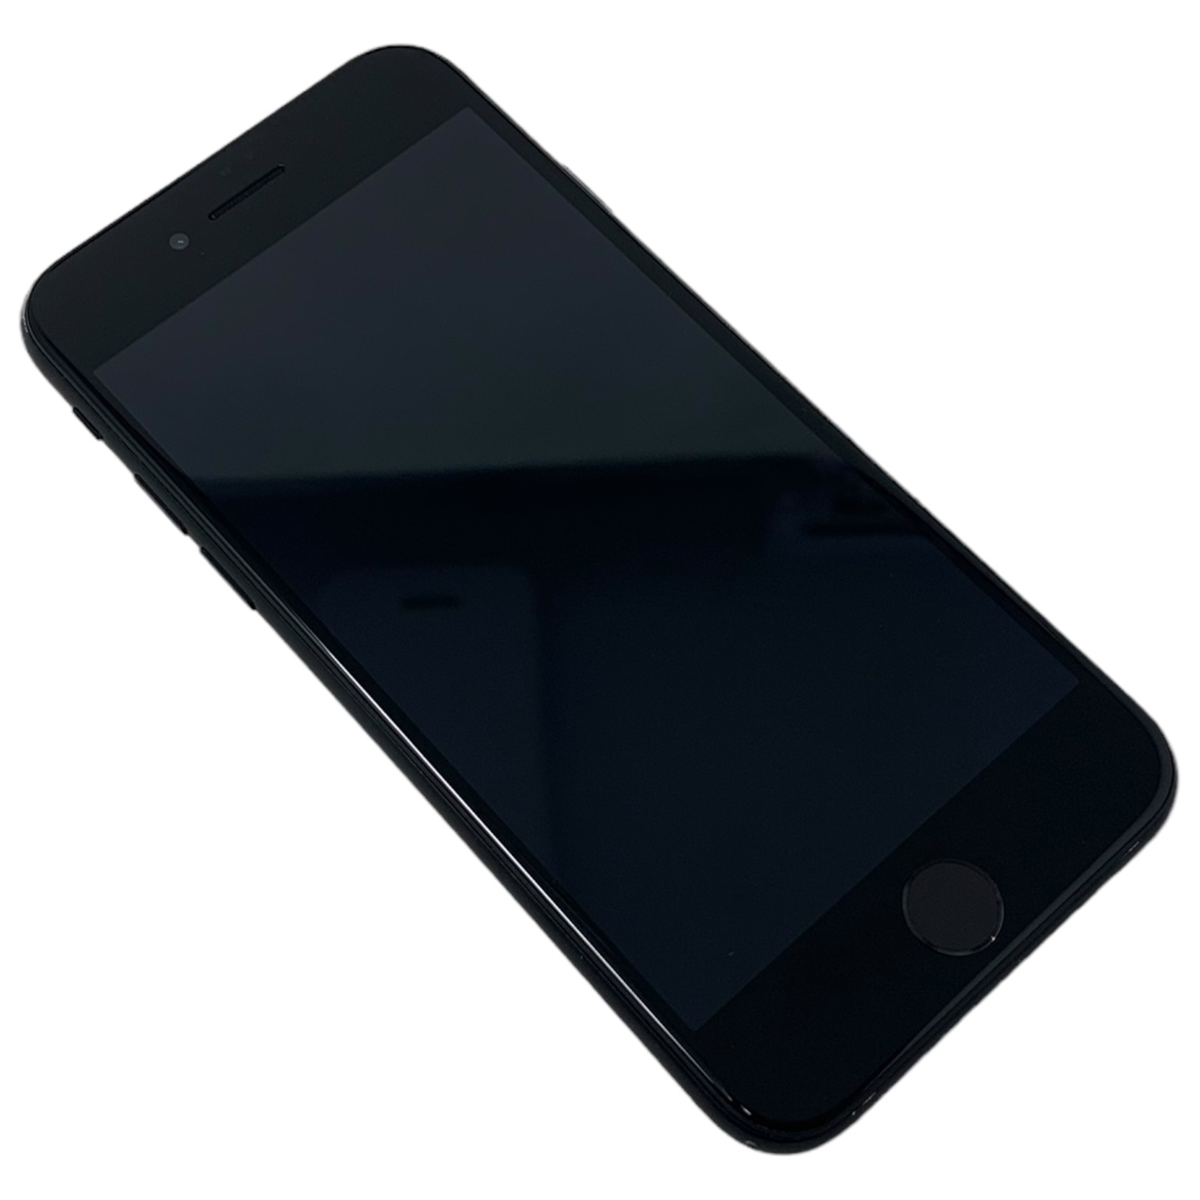 RSD7616 Apple iPhone SE 2020 128Gb GR. AB Garanzia 12 Mesi